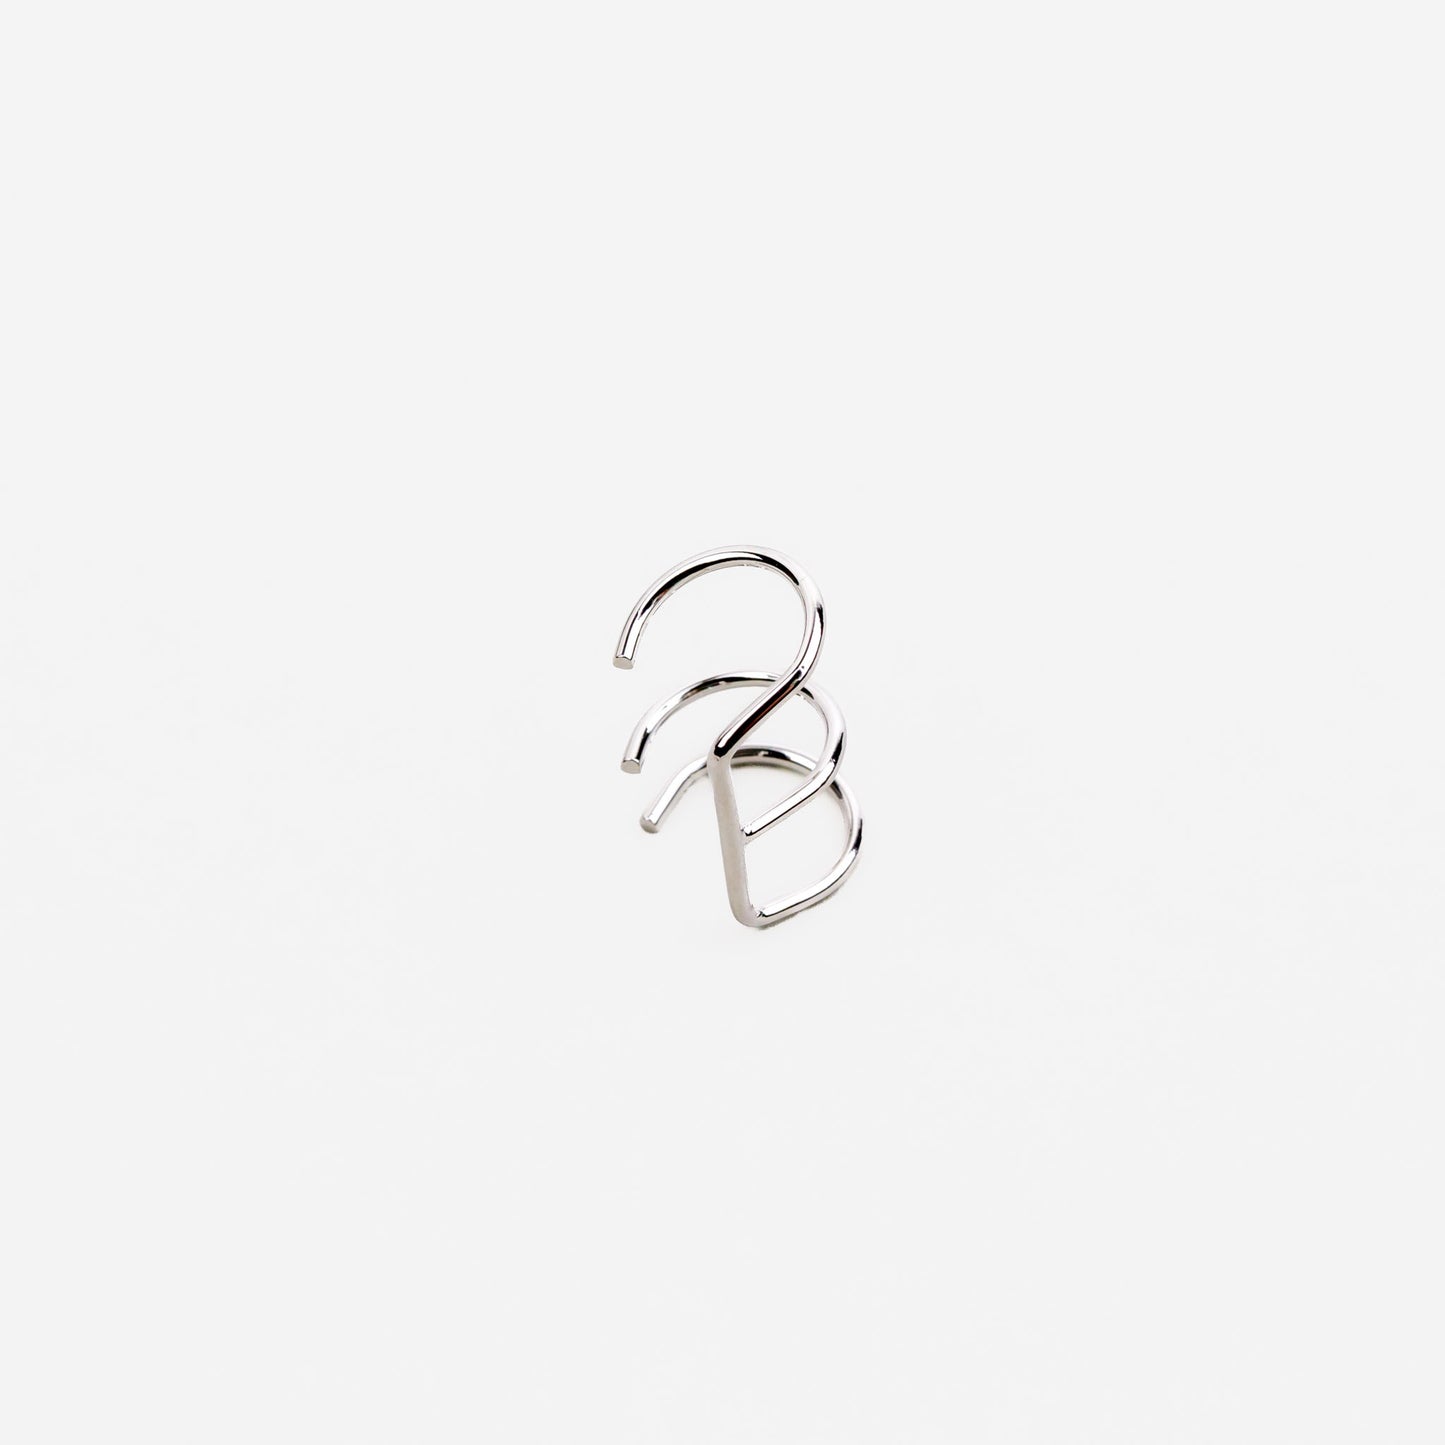 Cercel ear cuff în stil minimal trio - Argintiu